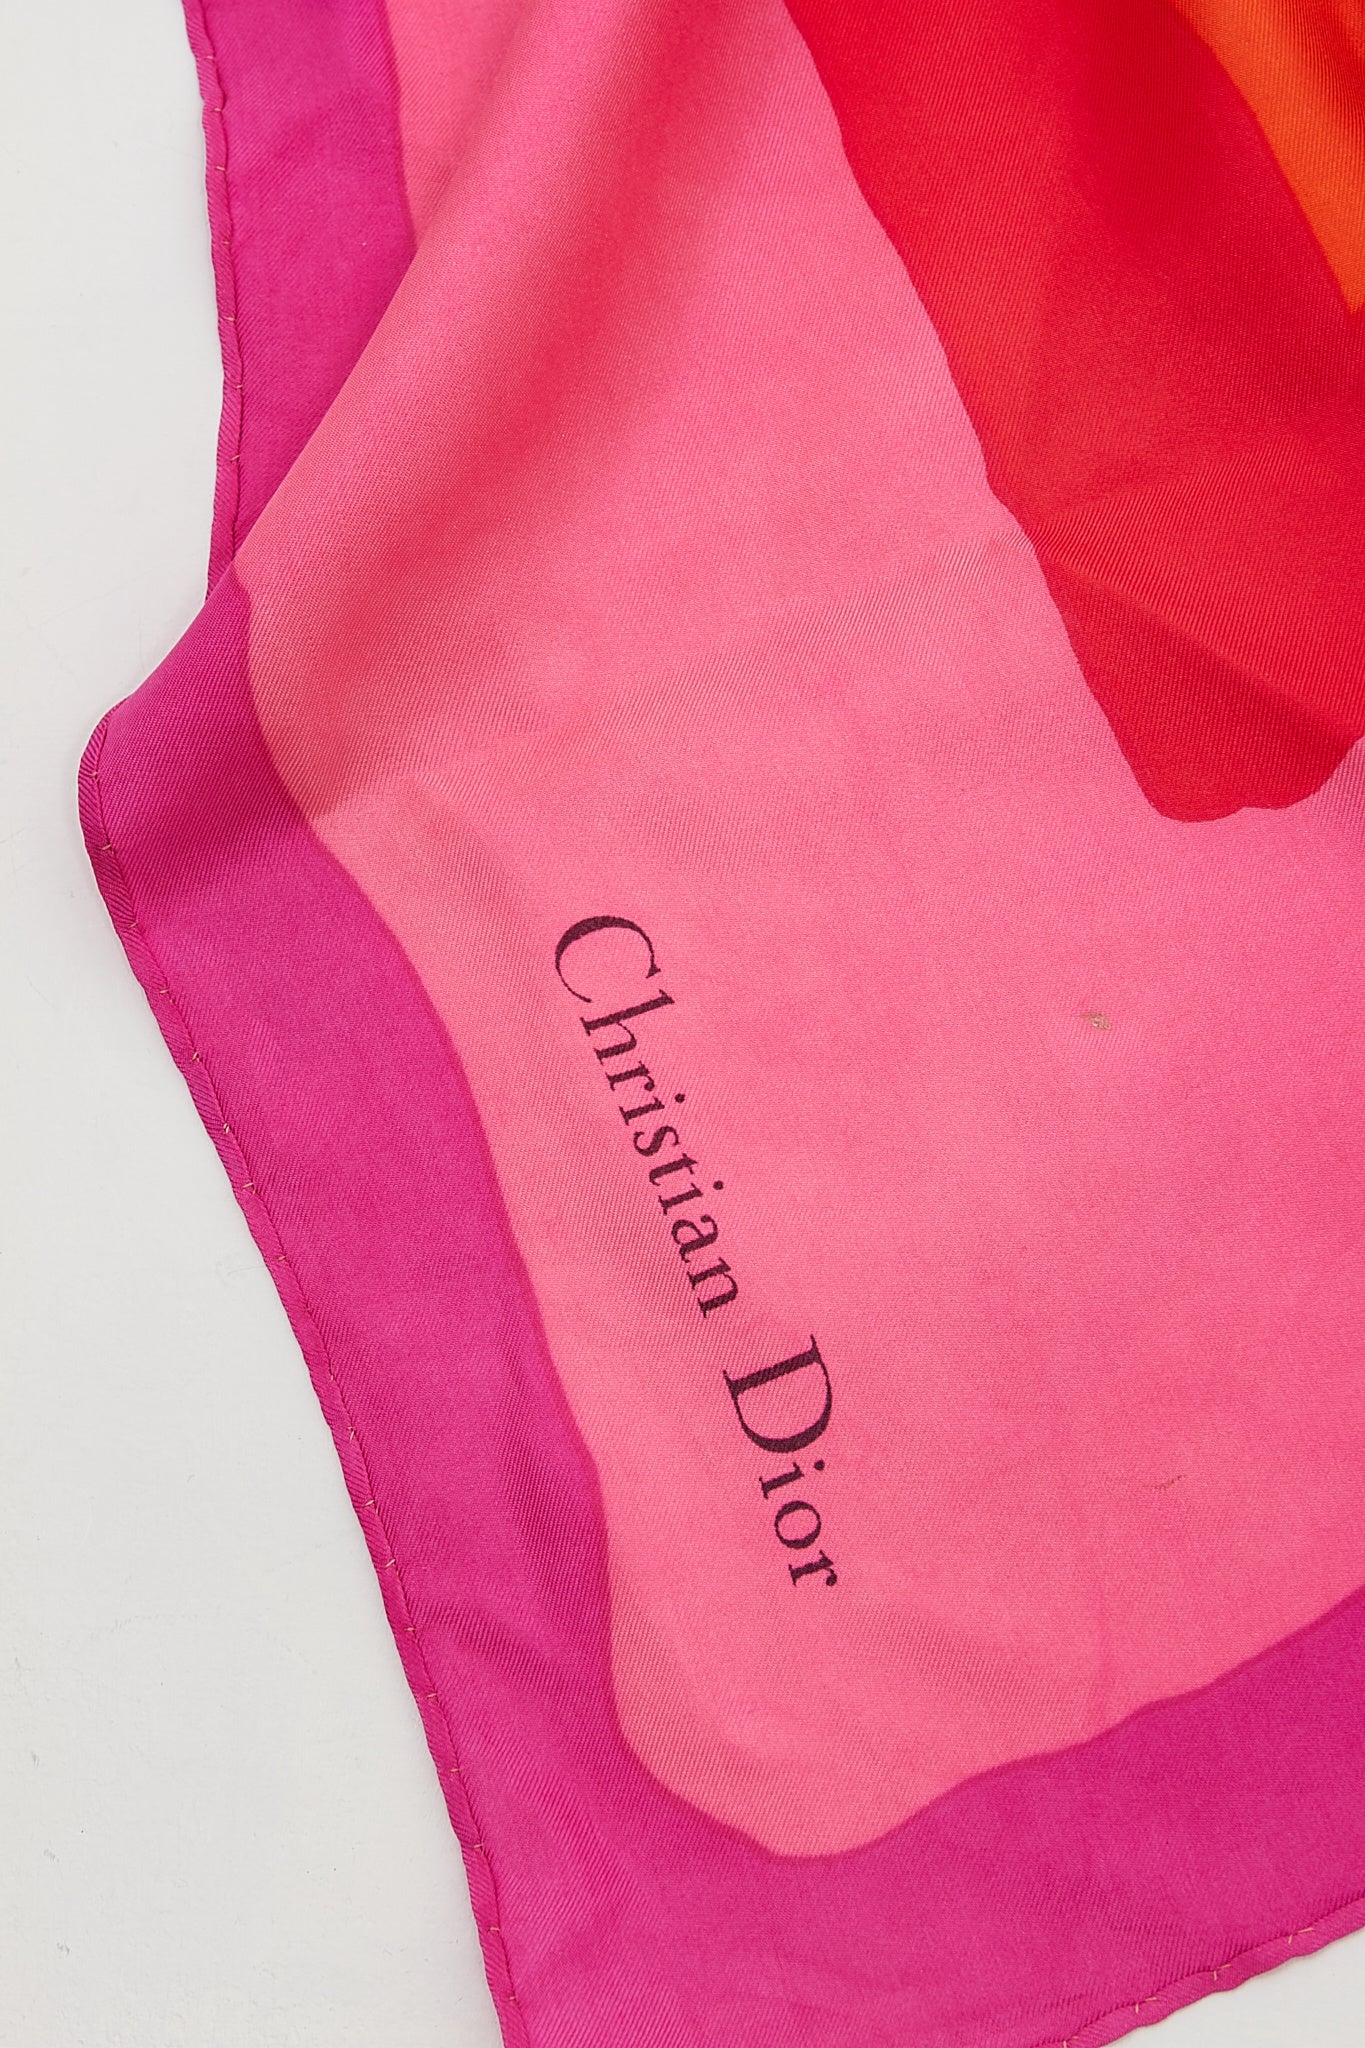 Dior Fuchsia/Orange/Red Silk Scarf